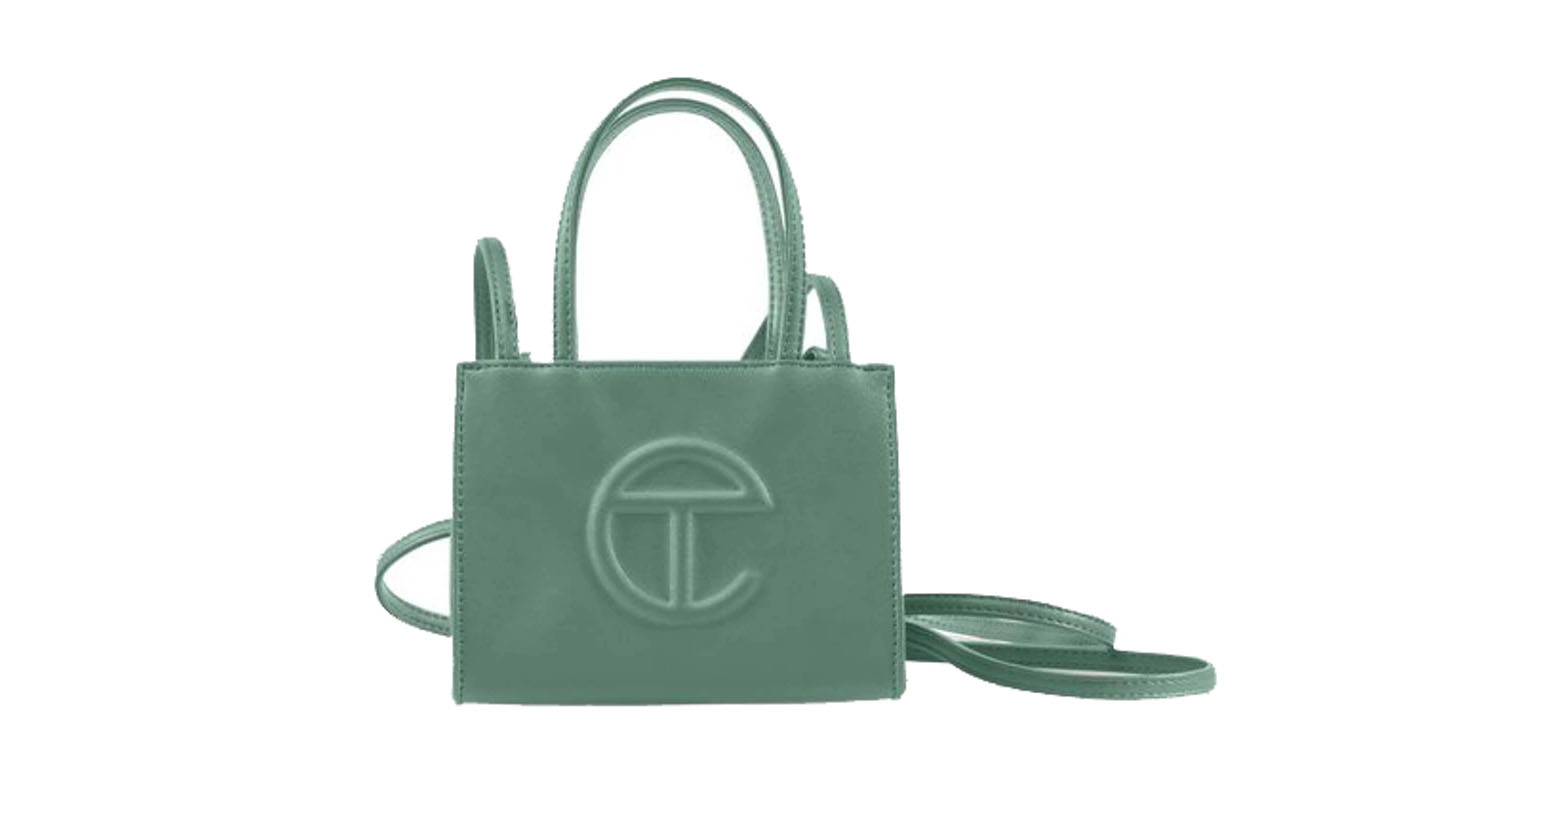 Telfar's iconic bag just secured a big design award